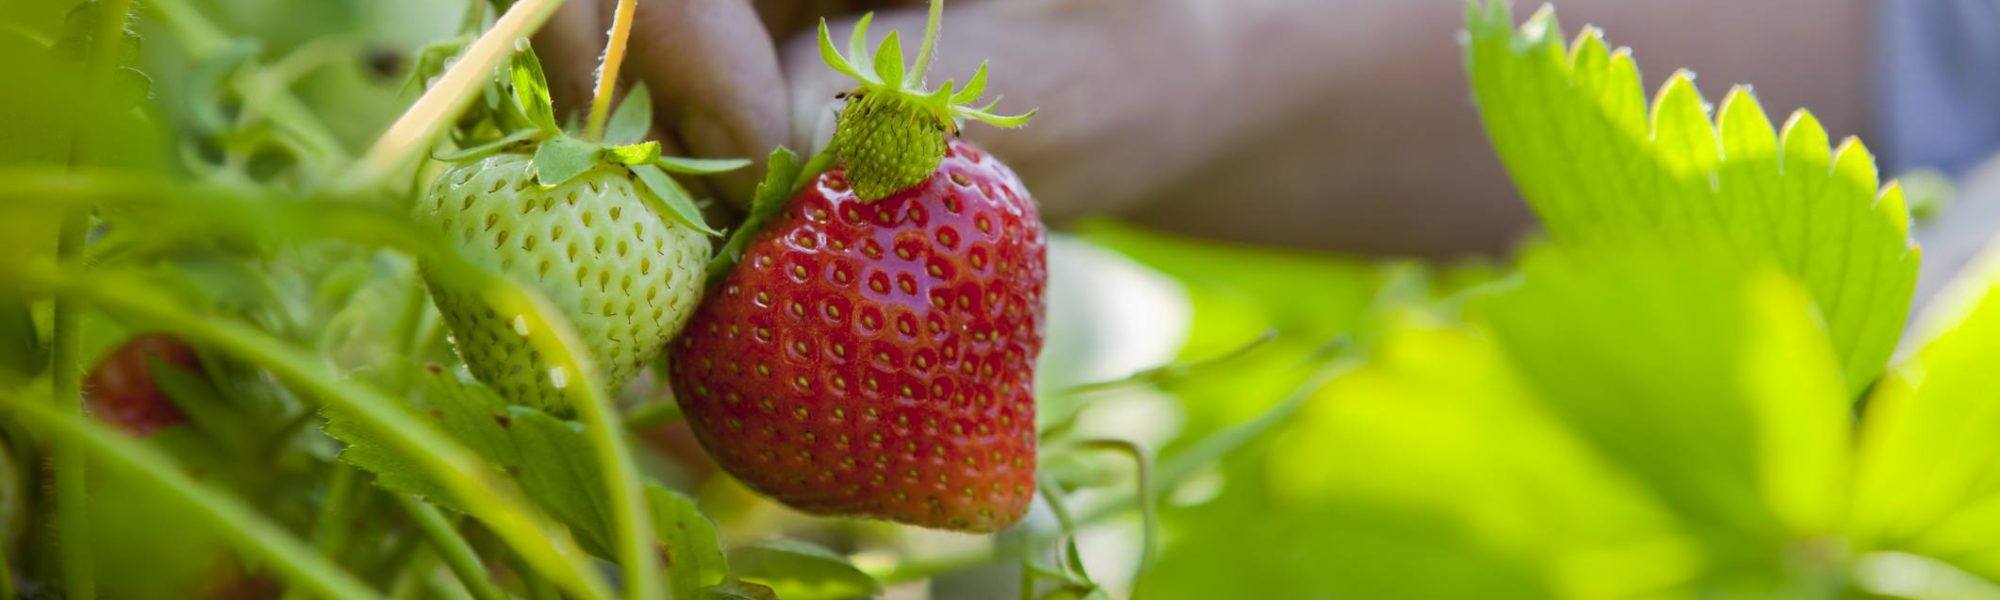 Summer Strawberry Picking